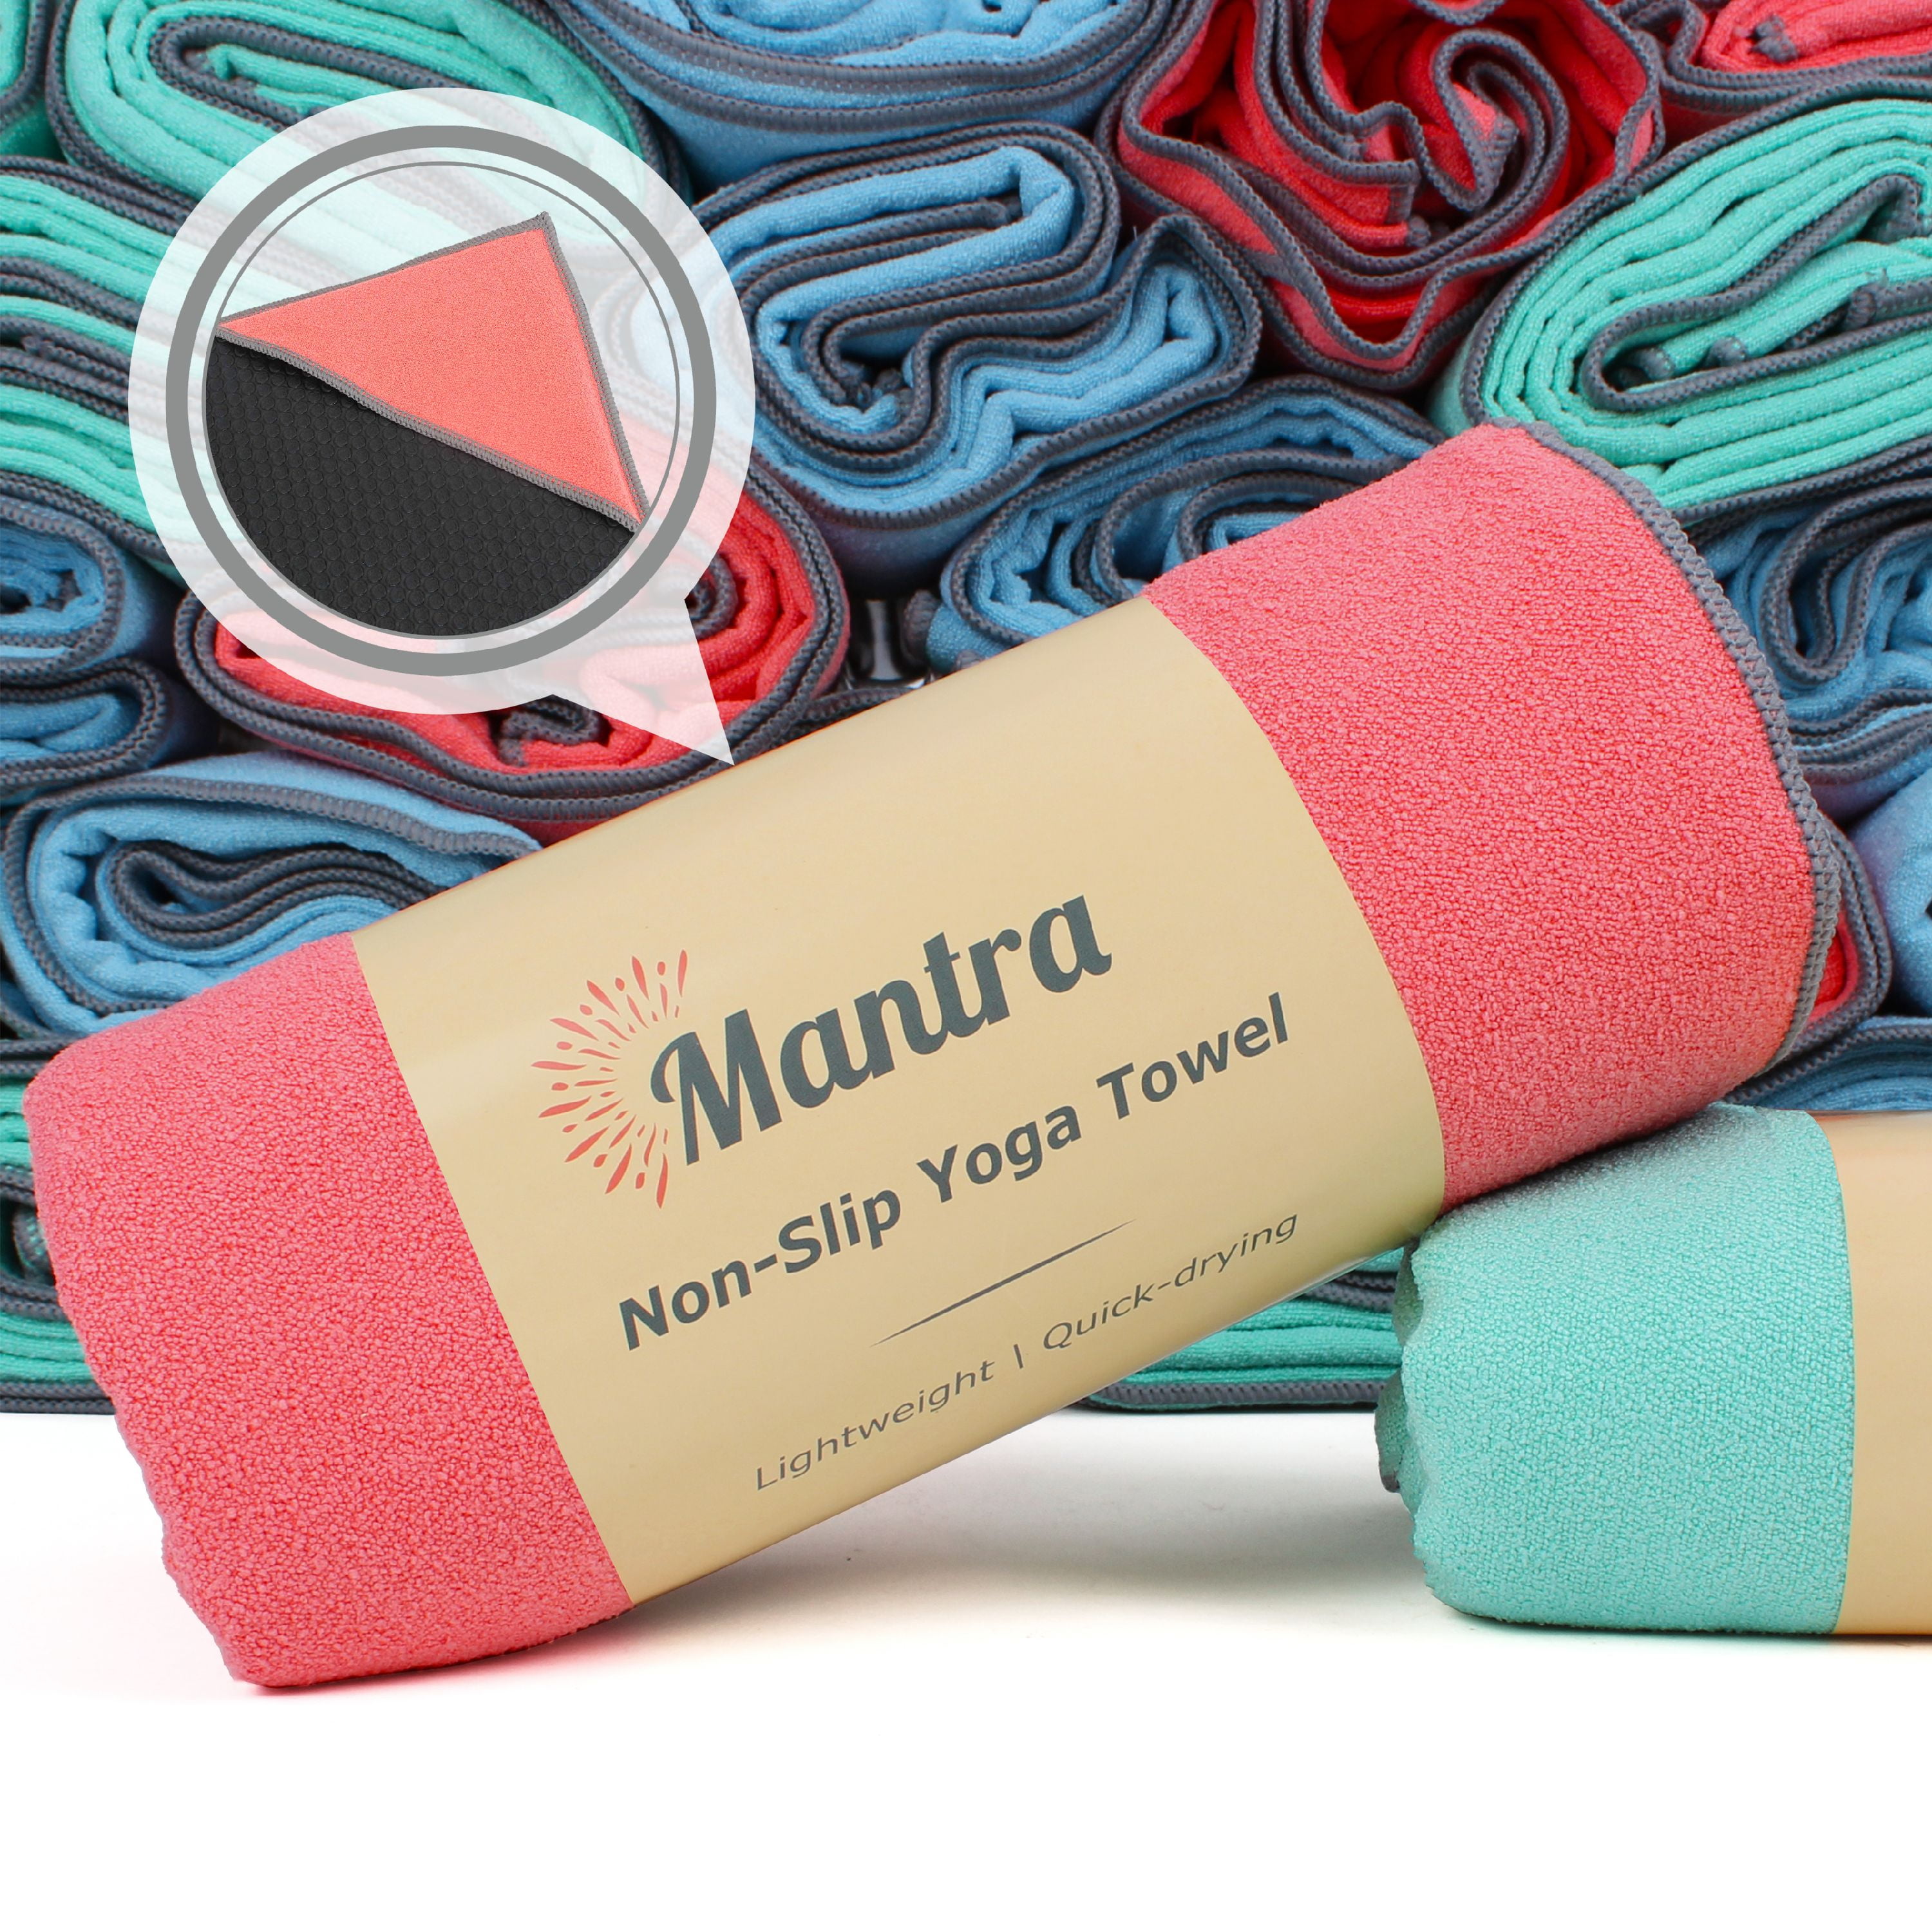 ZOEO Rainbow Galaxy Mermaid Scales Yoga Towel Mat Non Slip Hot Yoga Towels Dry Fast Bikram Pilates Women Exercise